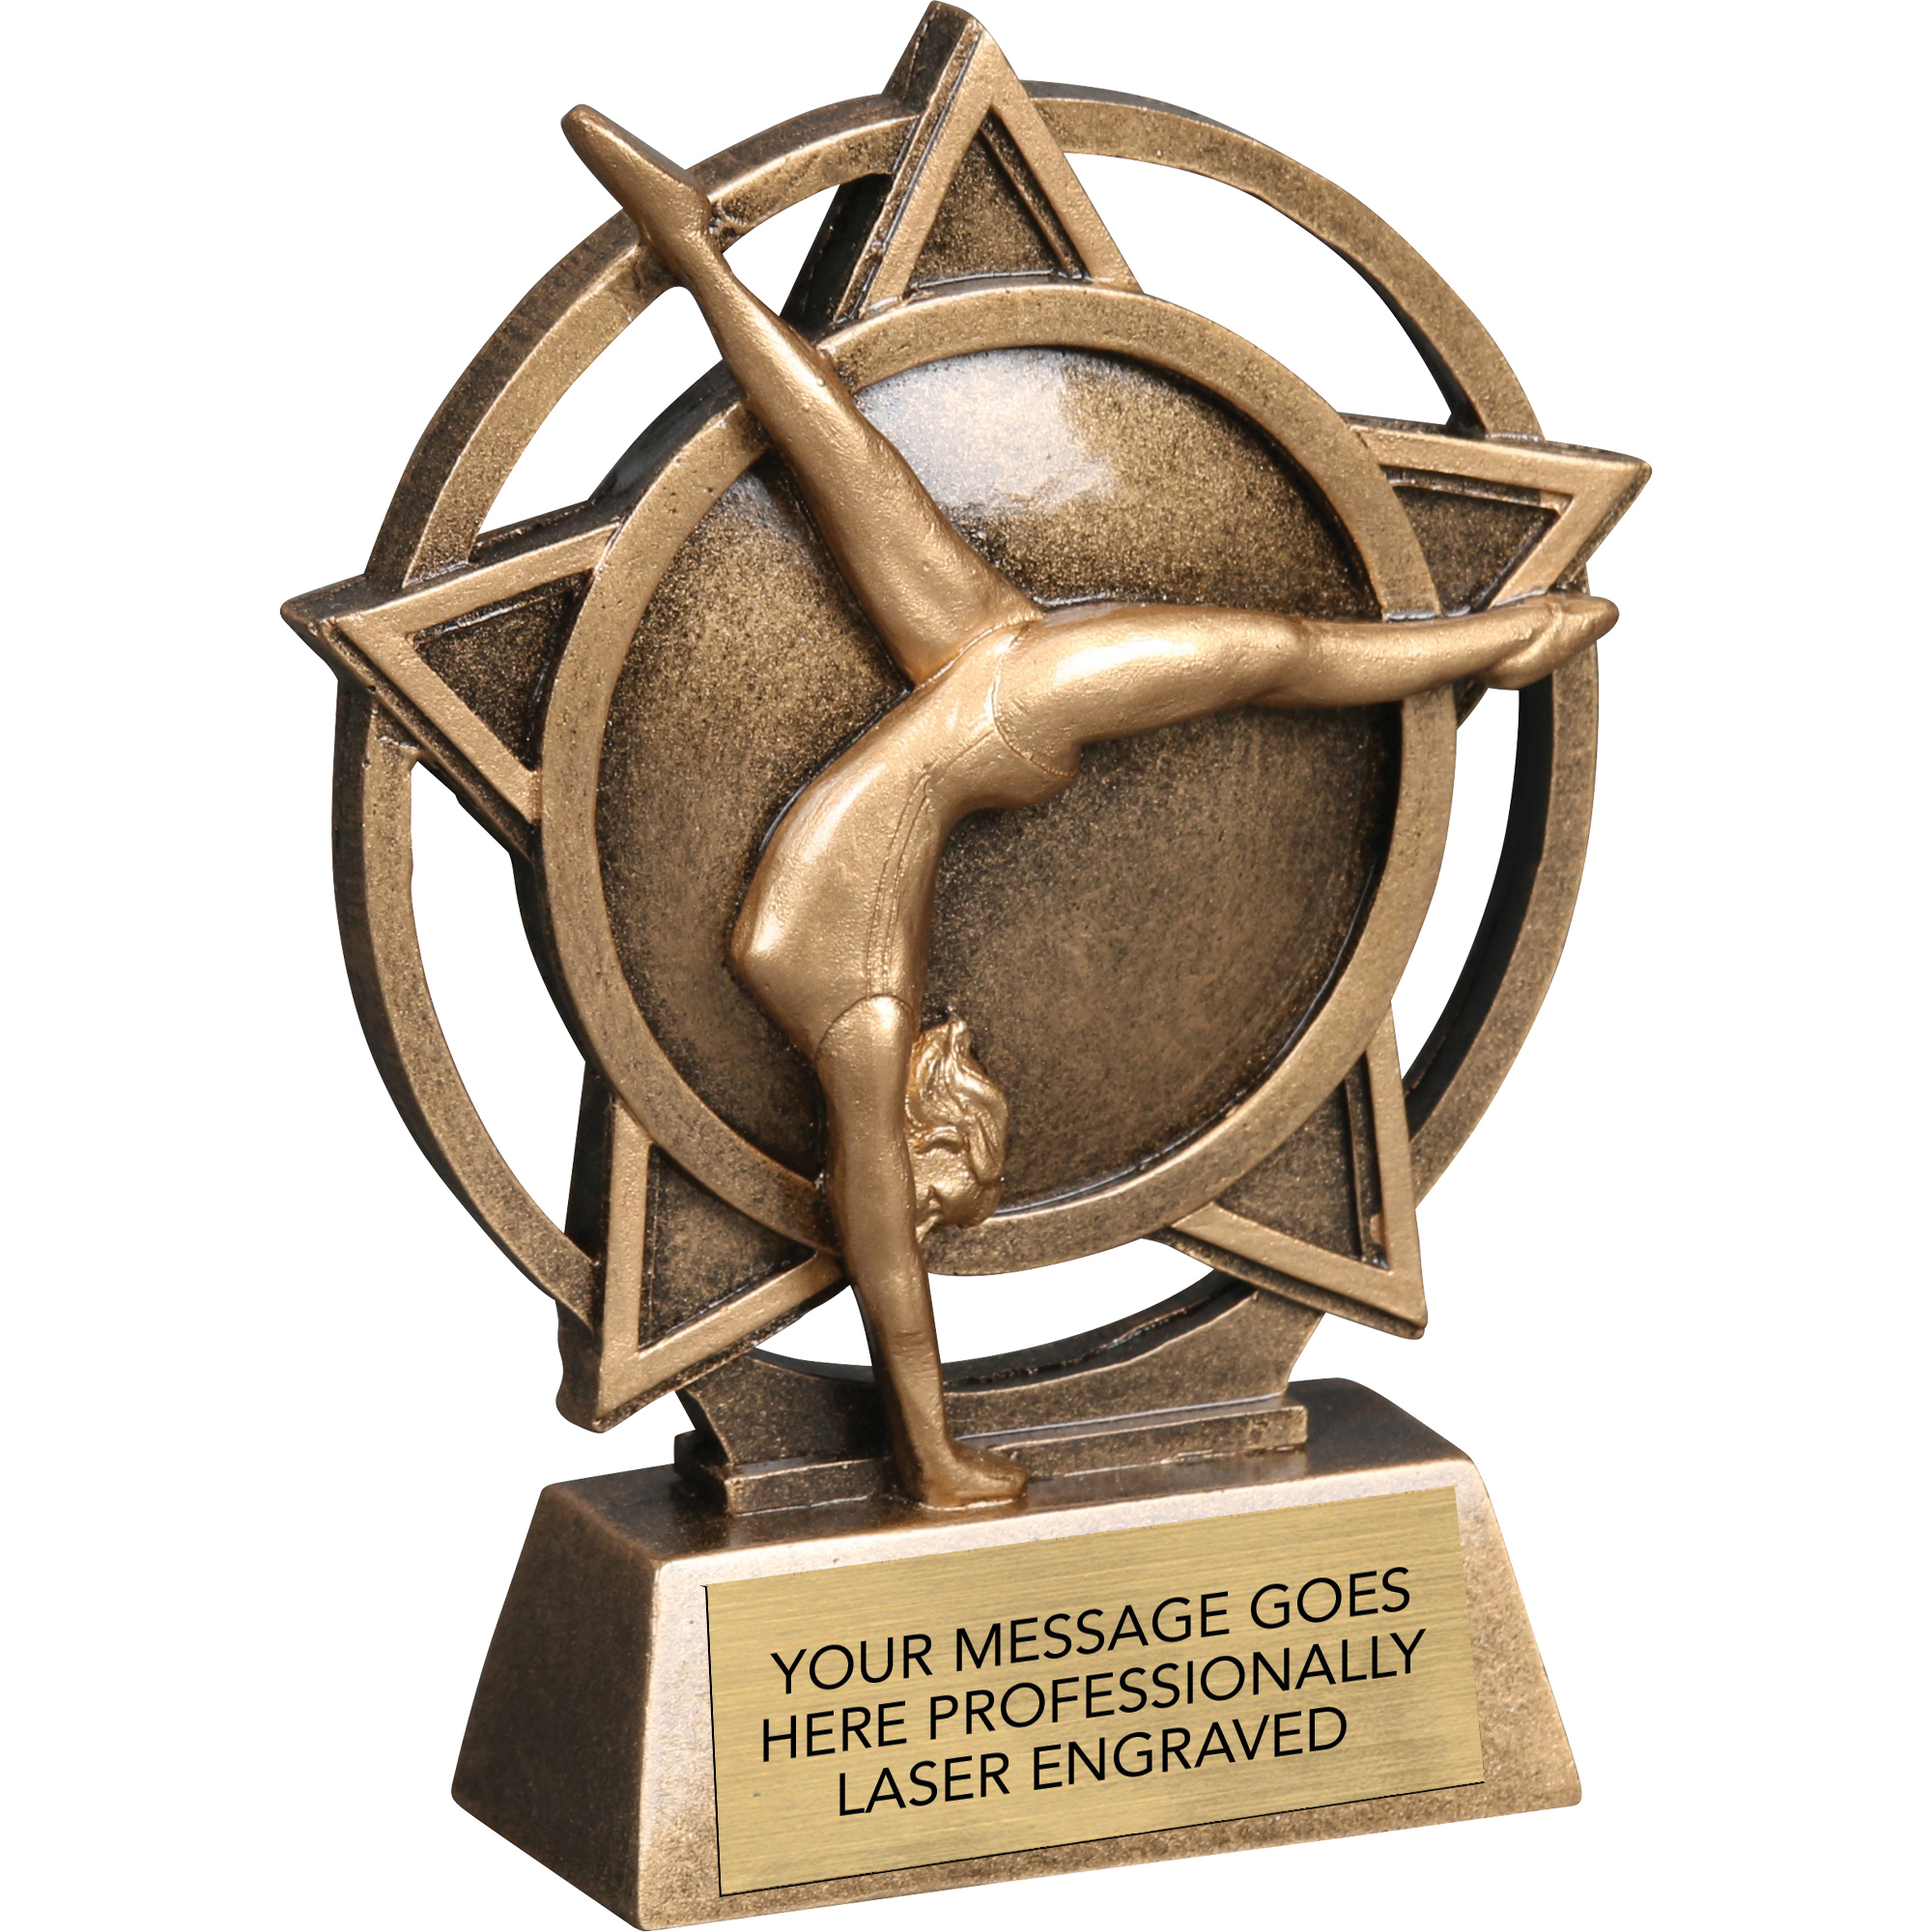 Gymnastics Female Orbit Resin Sculpture Trophy